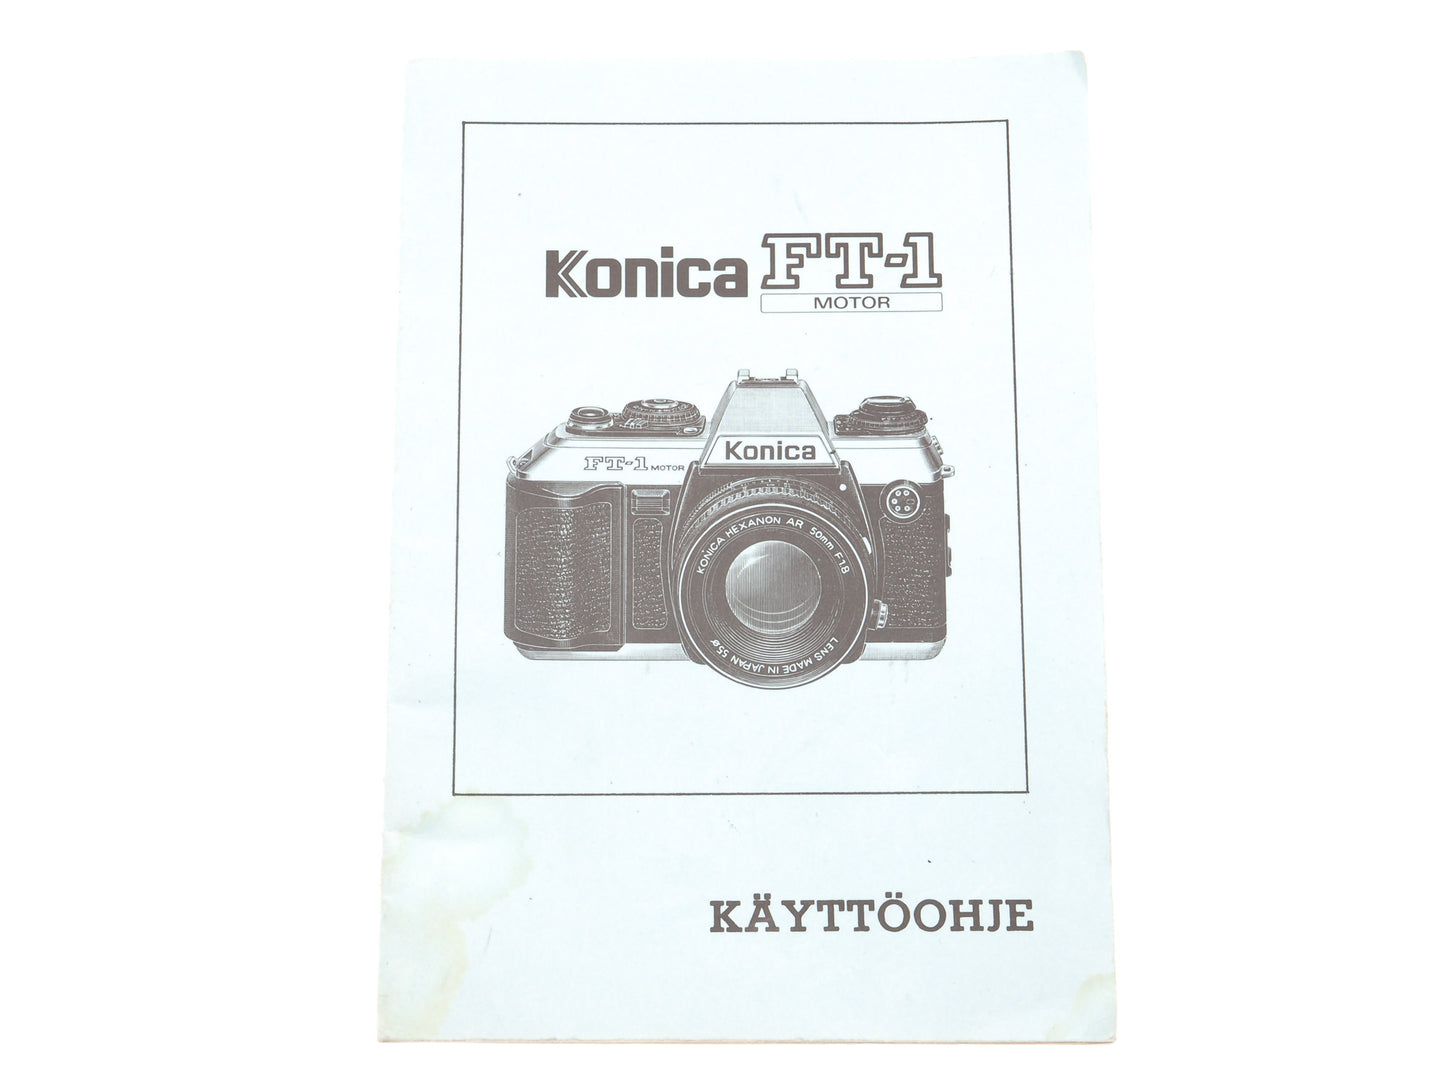 Konica FT-1 Motor Instructions